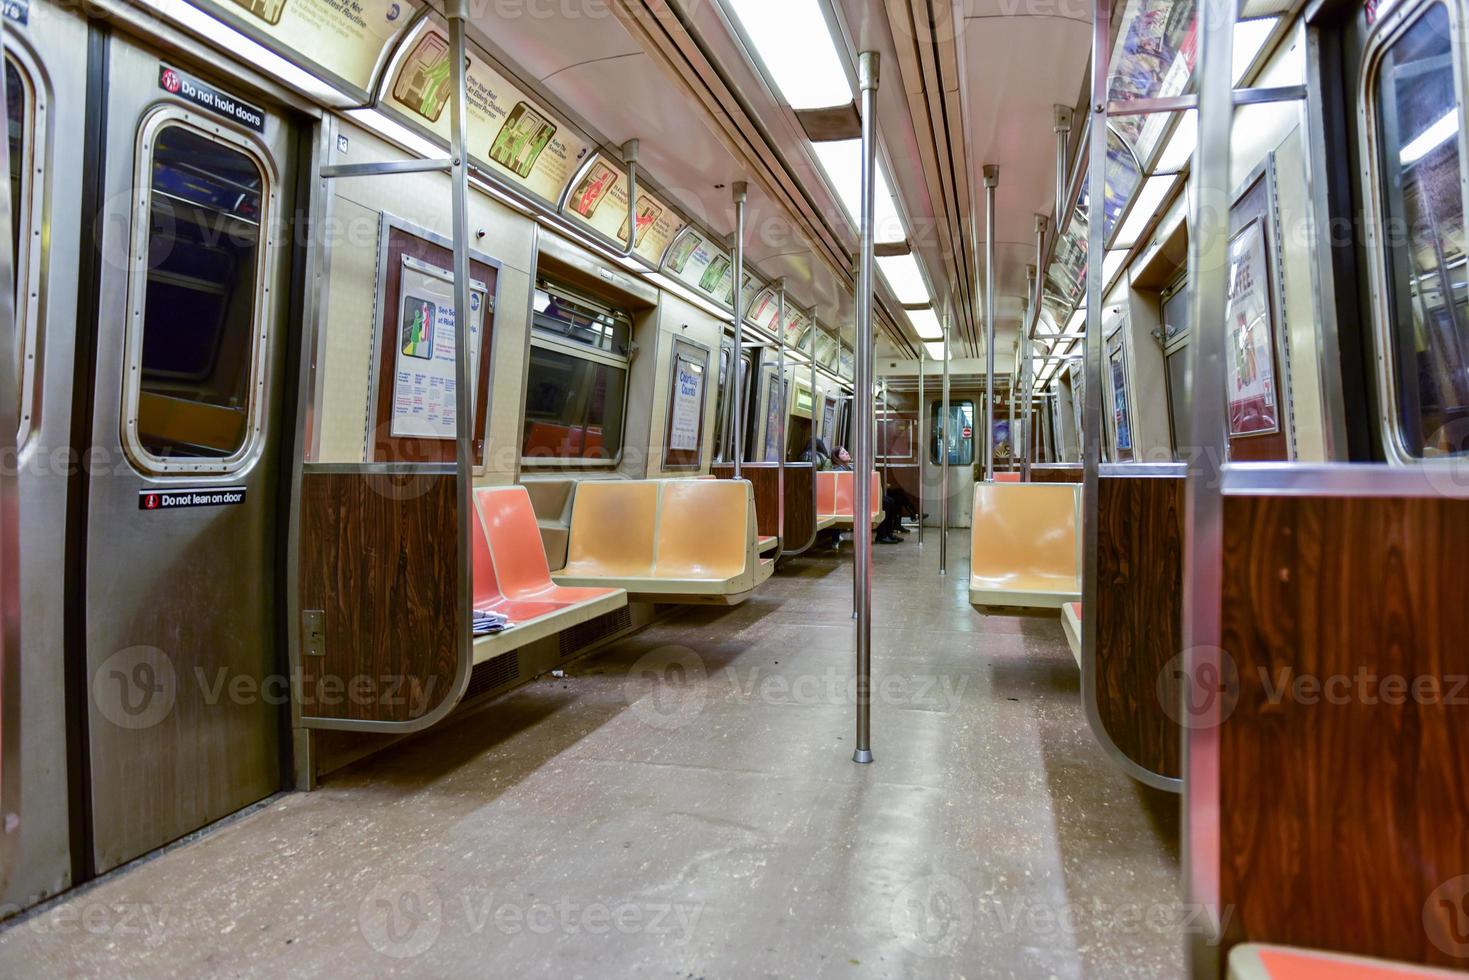 New York City Subway Car interior when empty. photo